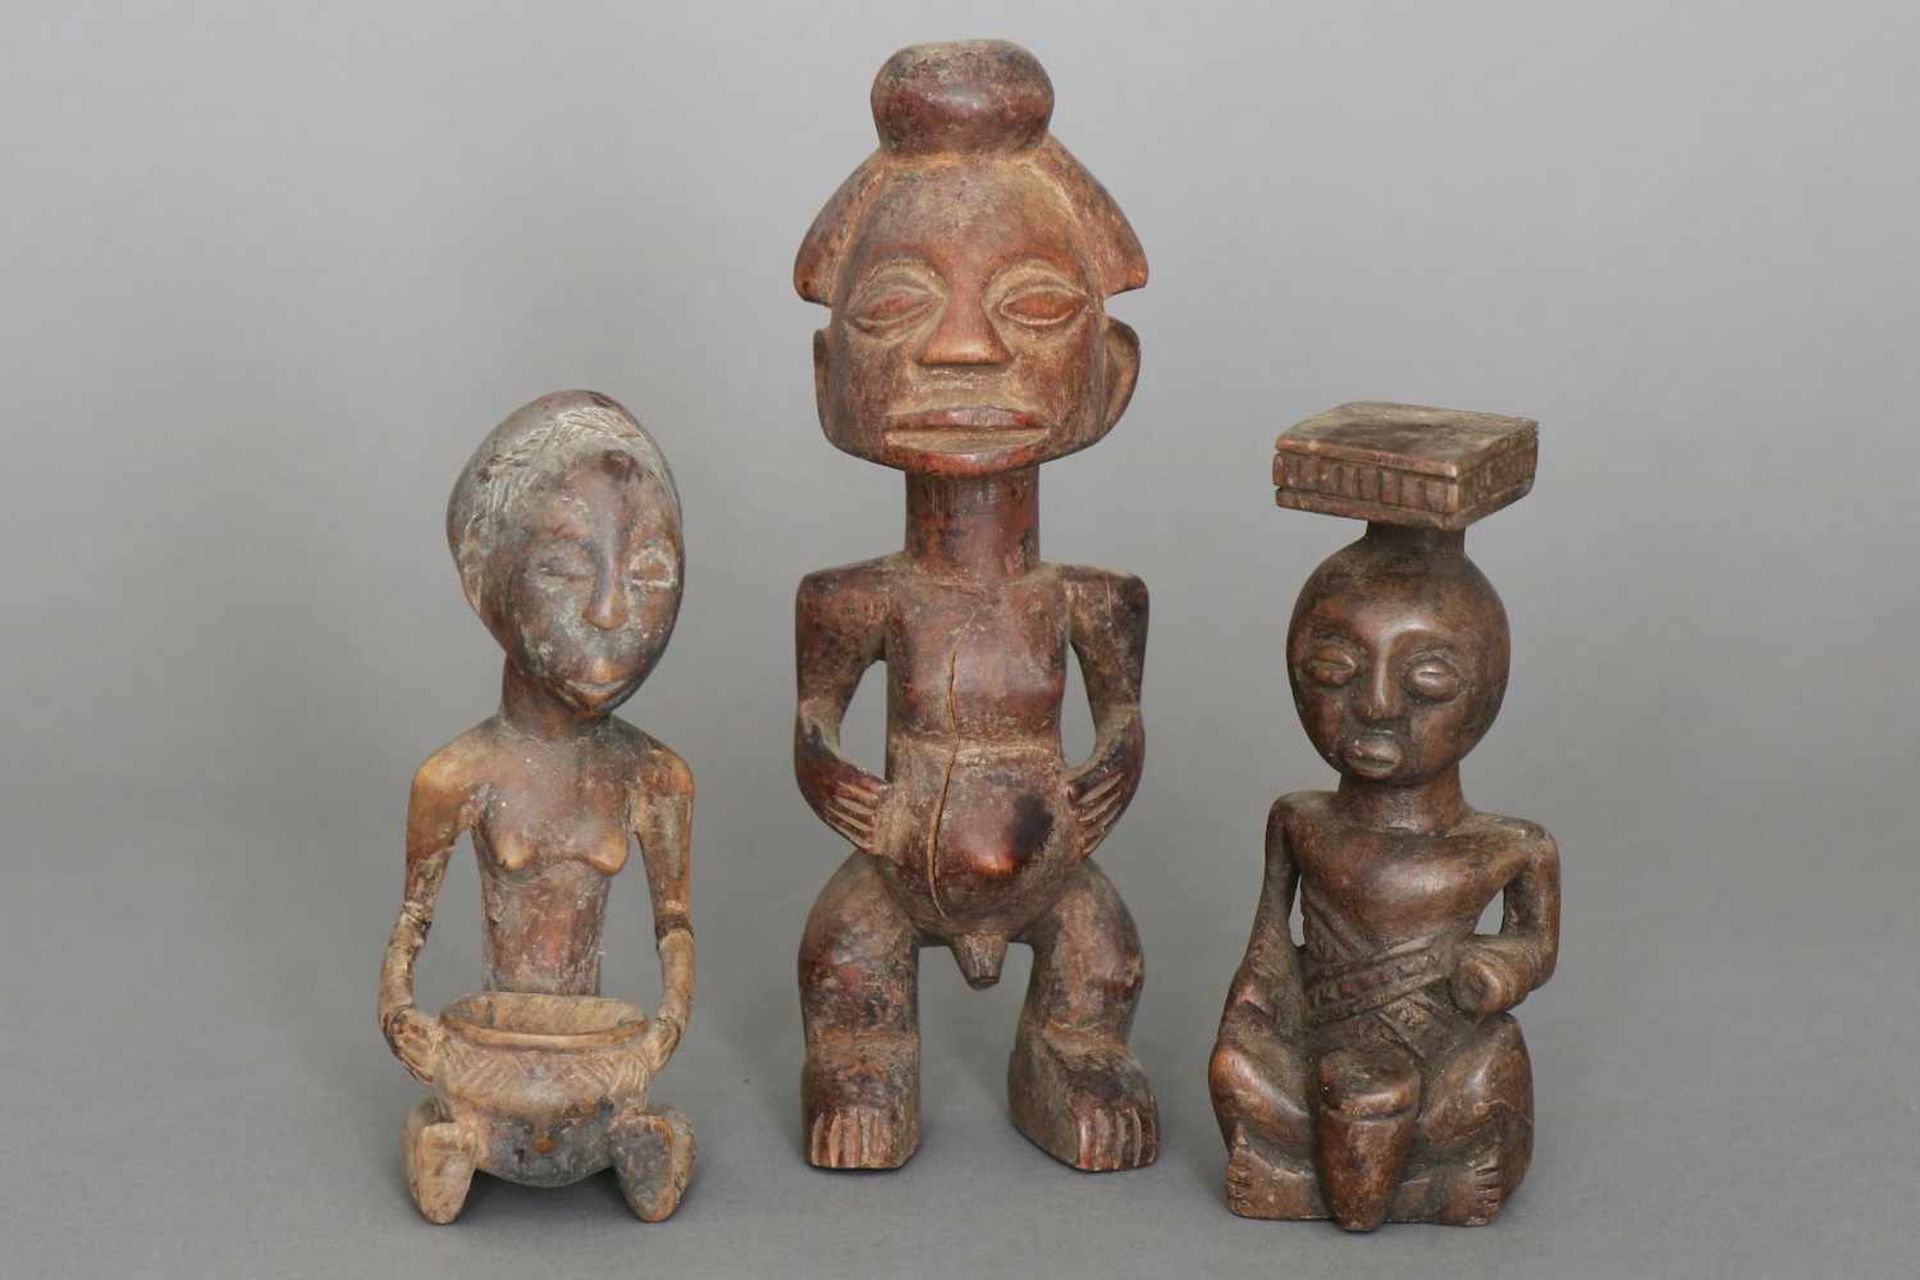 3 afrikanische Ritualfigurendiverse, Holz, geschnitzt, wohl Kongo, H ca. 13-19cm, aus Sammlung